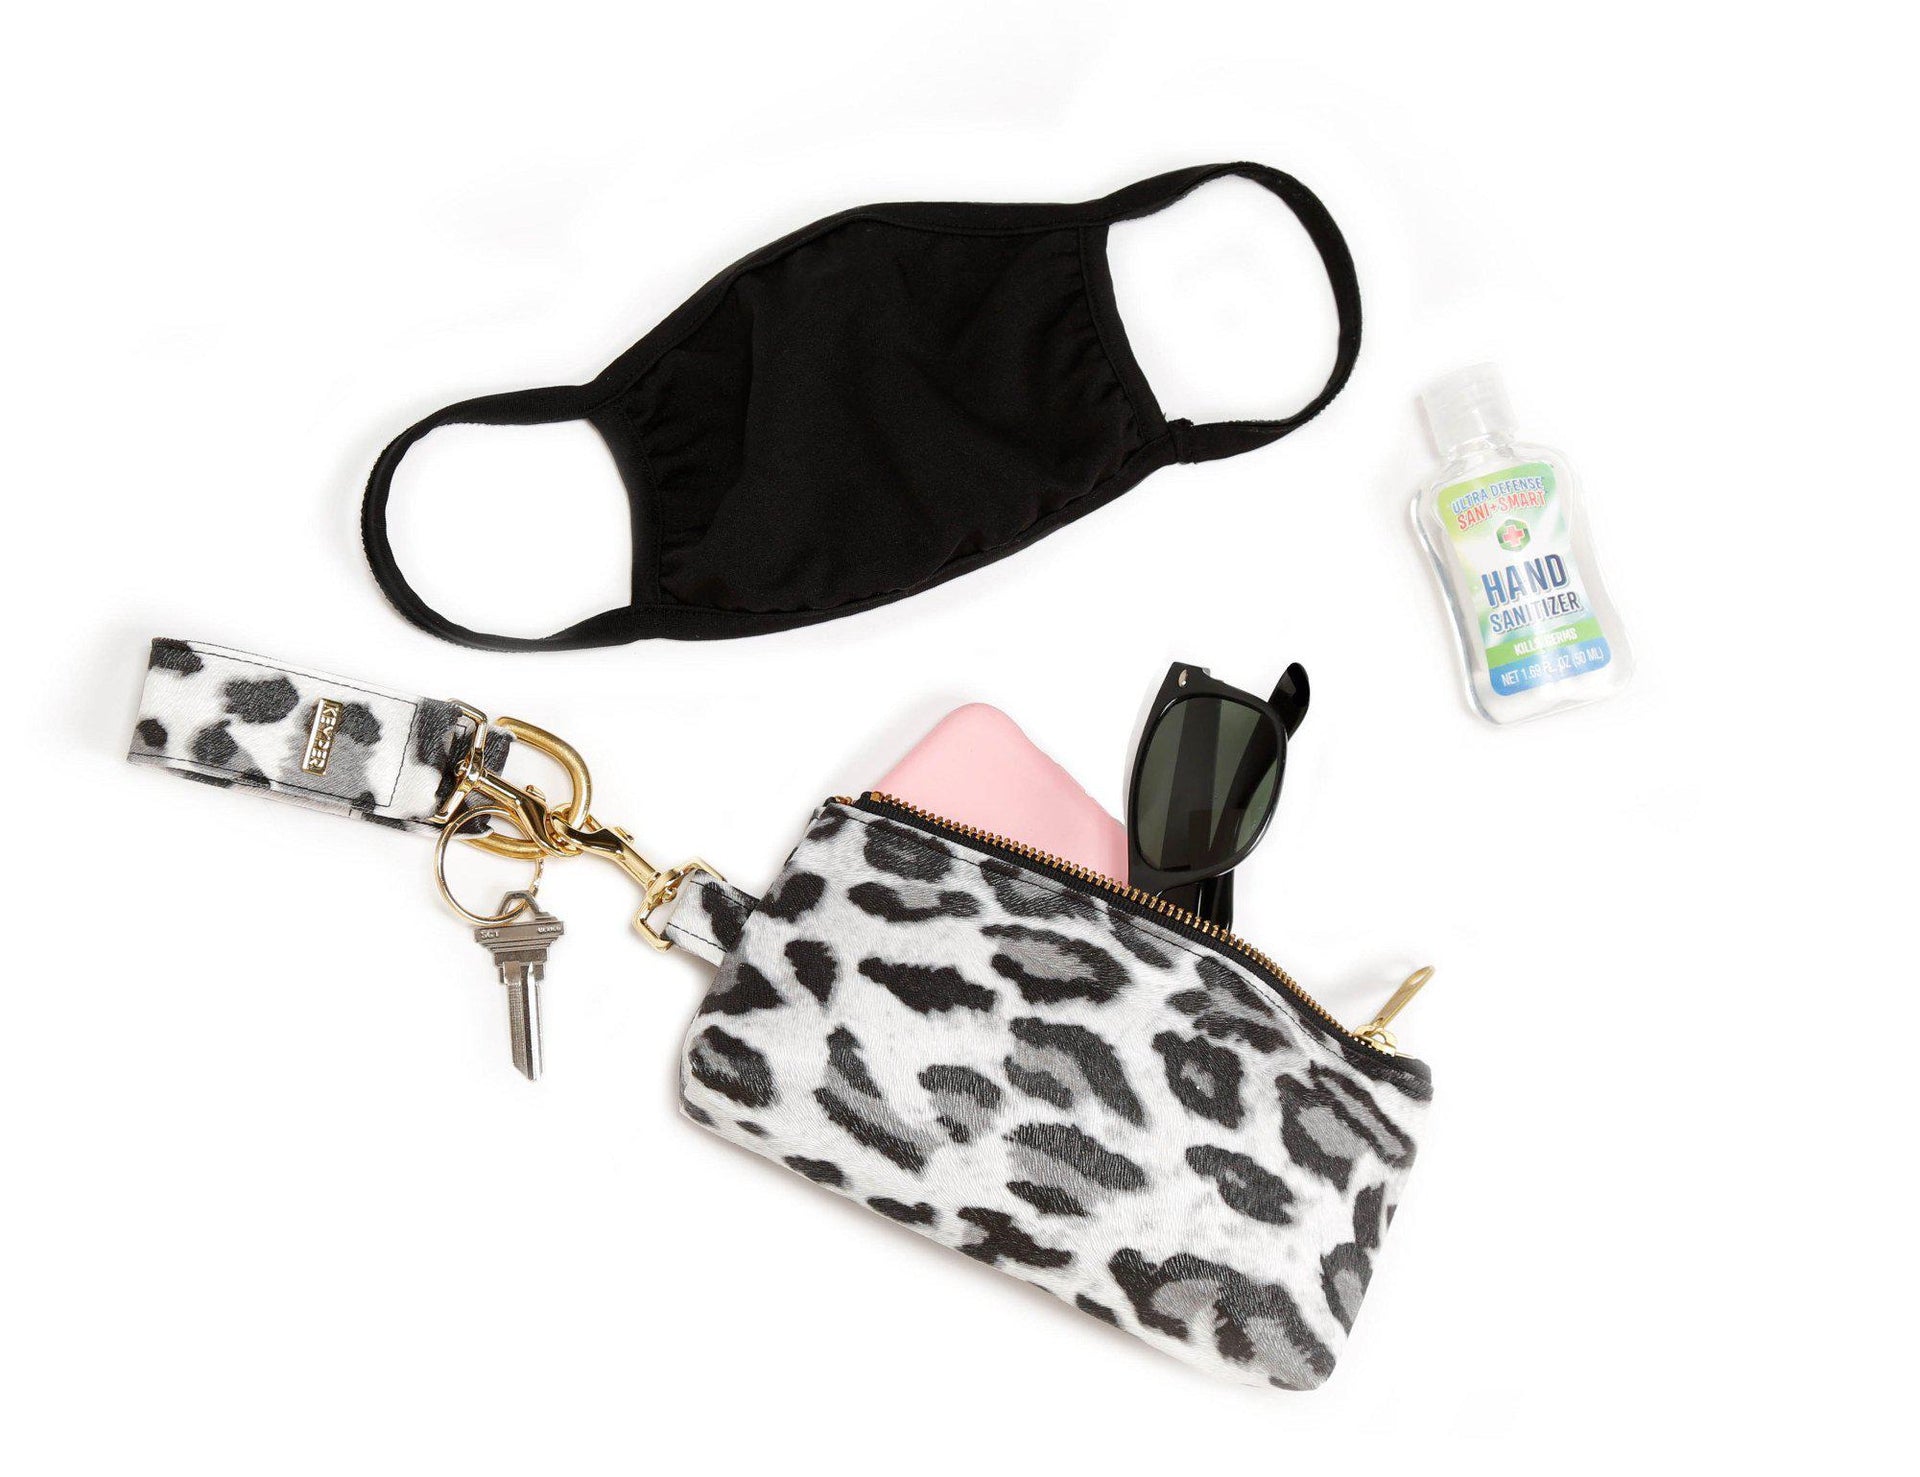 Snow leopard key ring wristlet purse